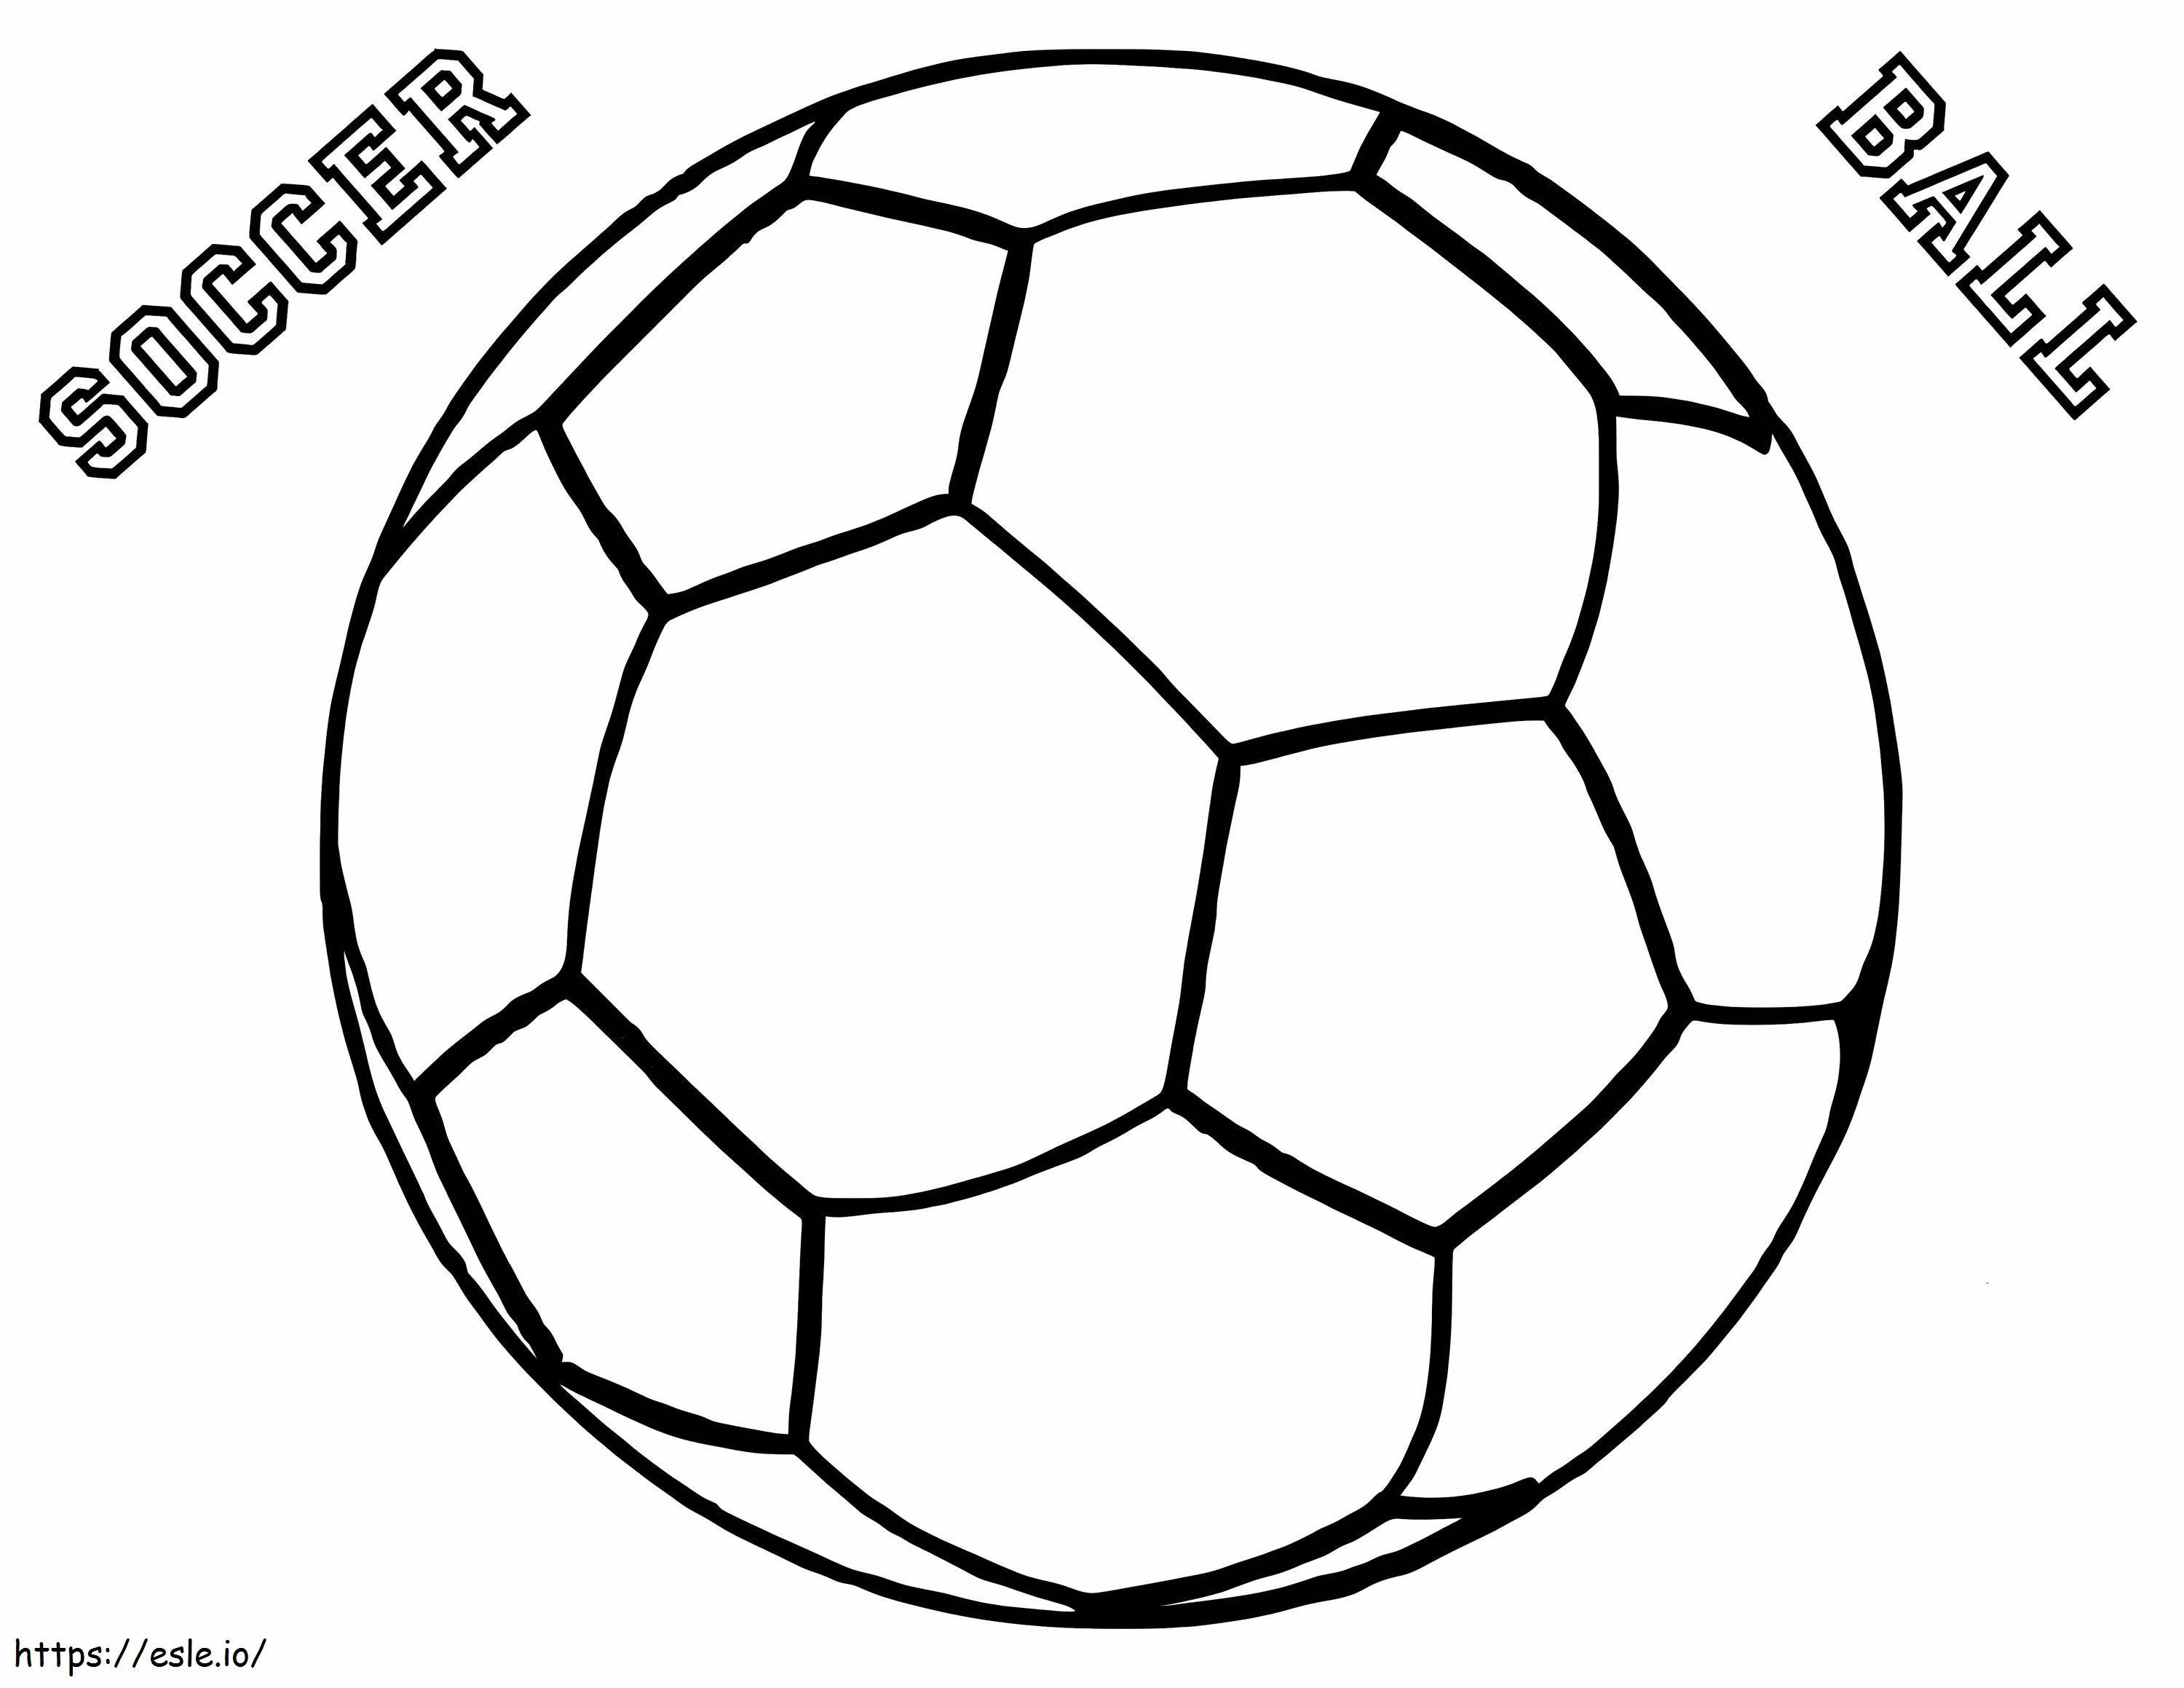 Printable Soccer Ball coloring page